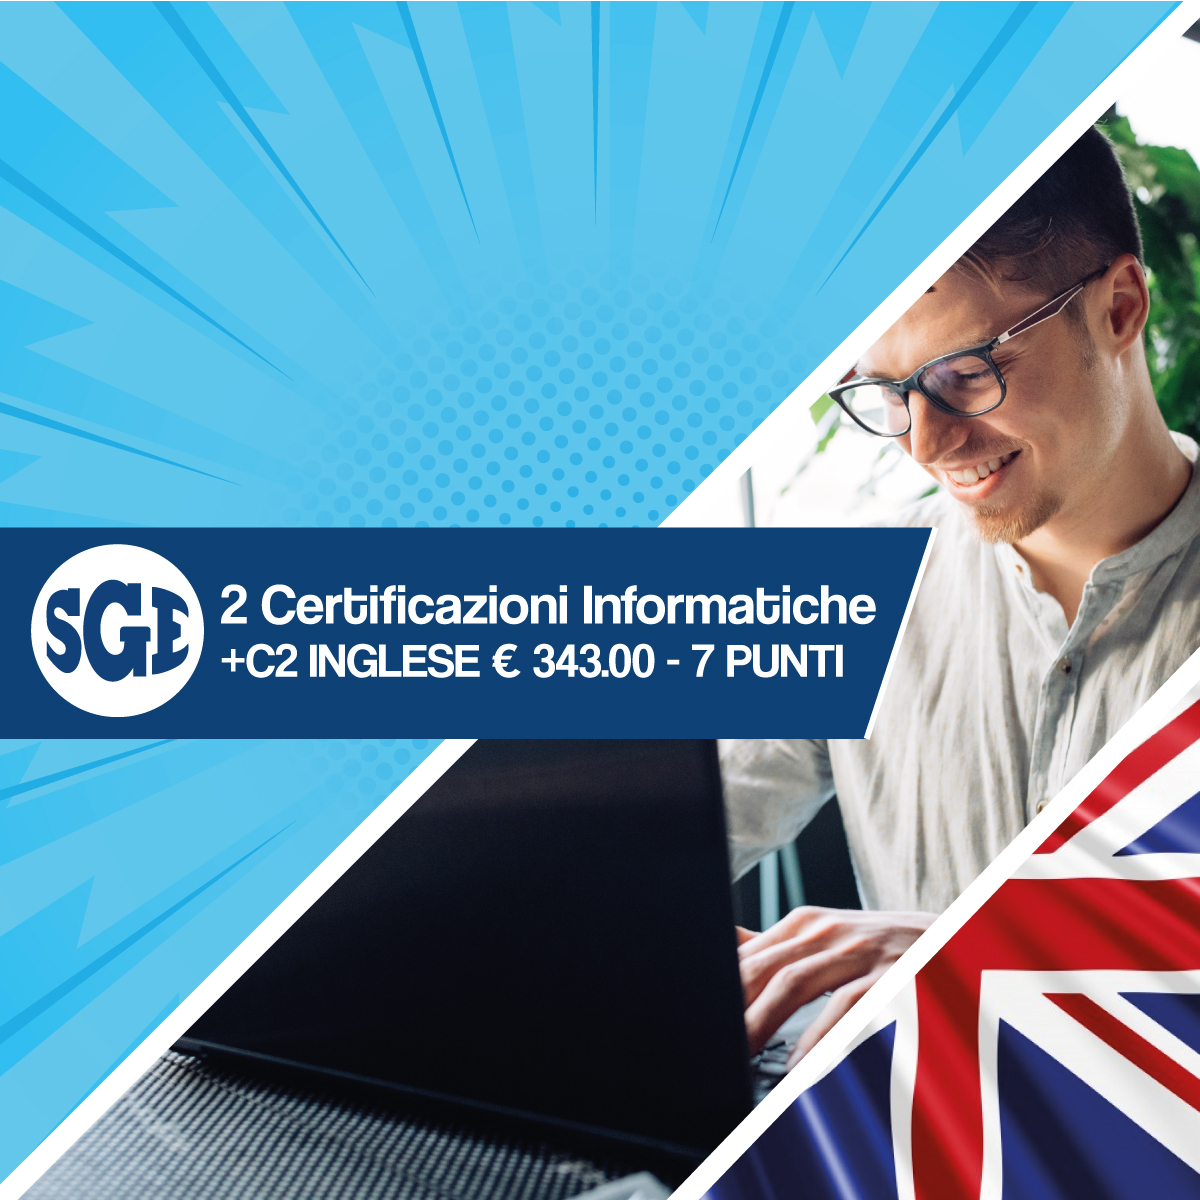 4 Certificazioni Informatiche € 494.00 - 7,5 PUNTI